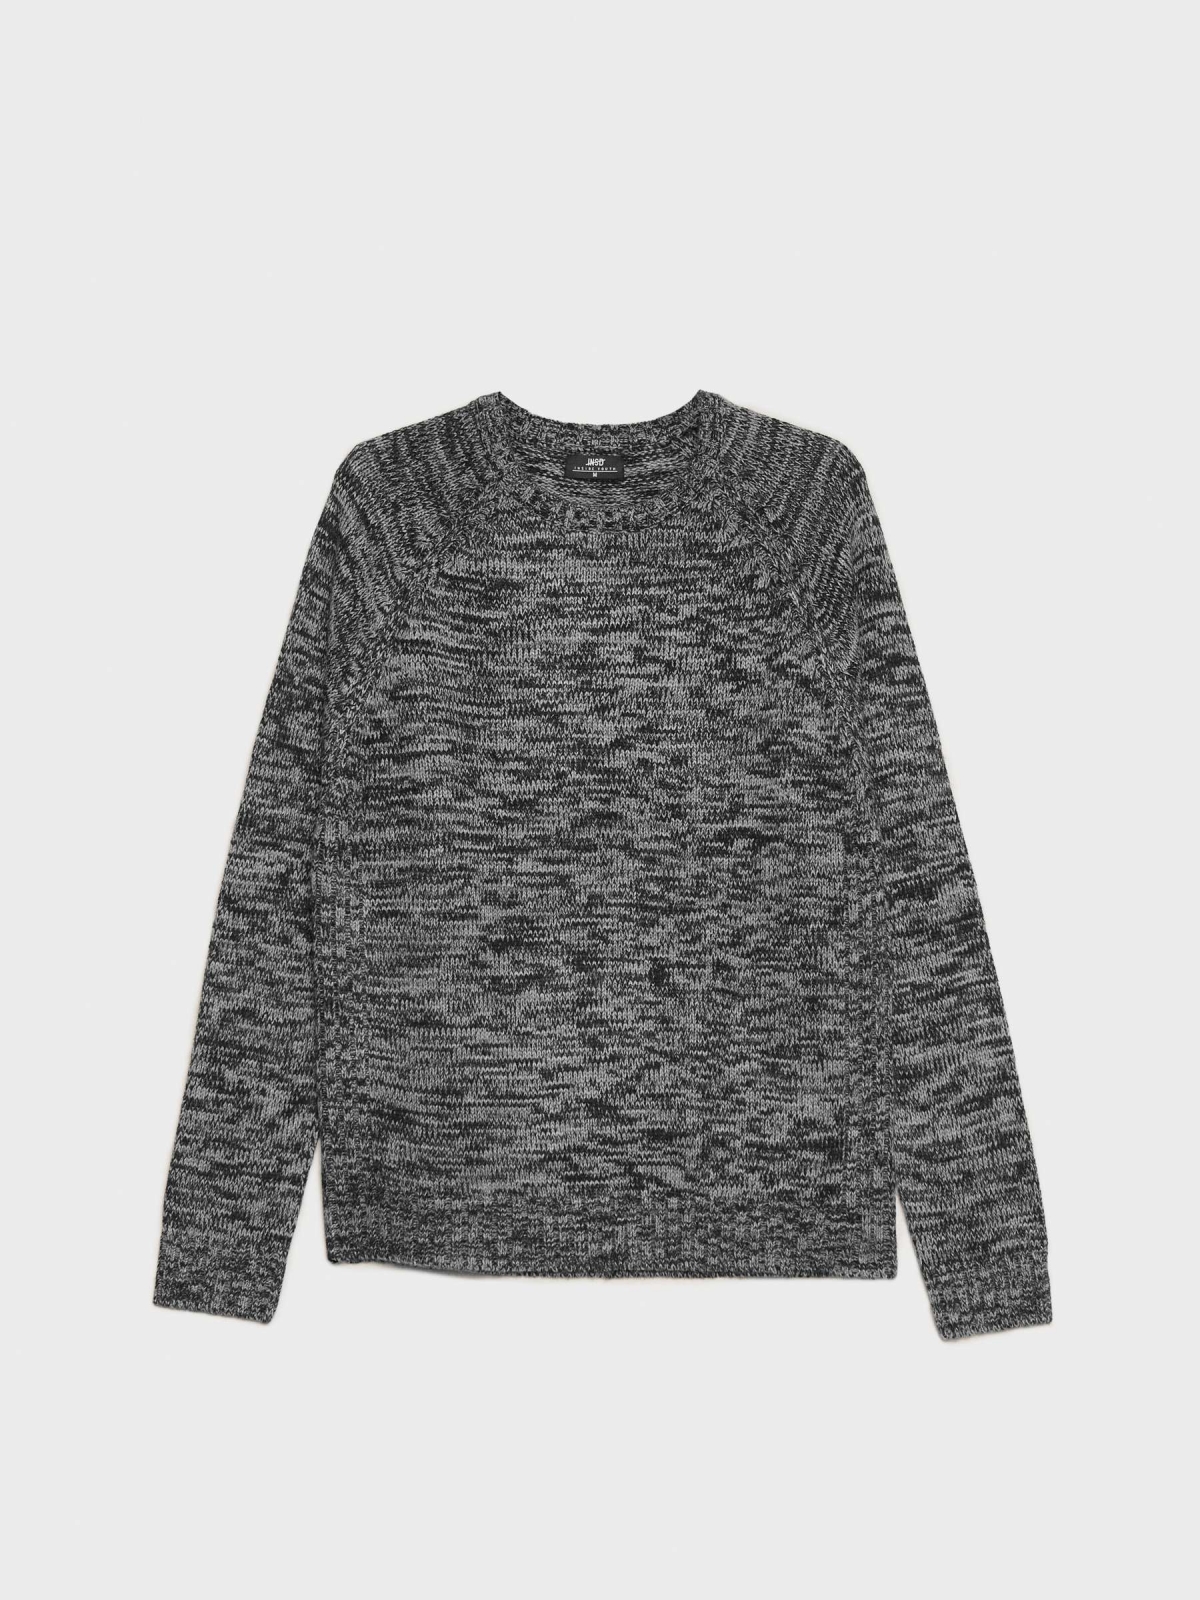  Marbled knitted sweater dark grey